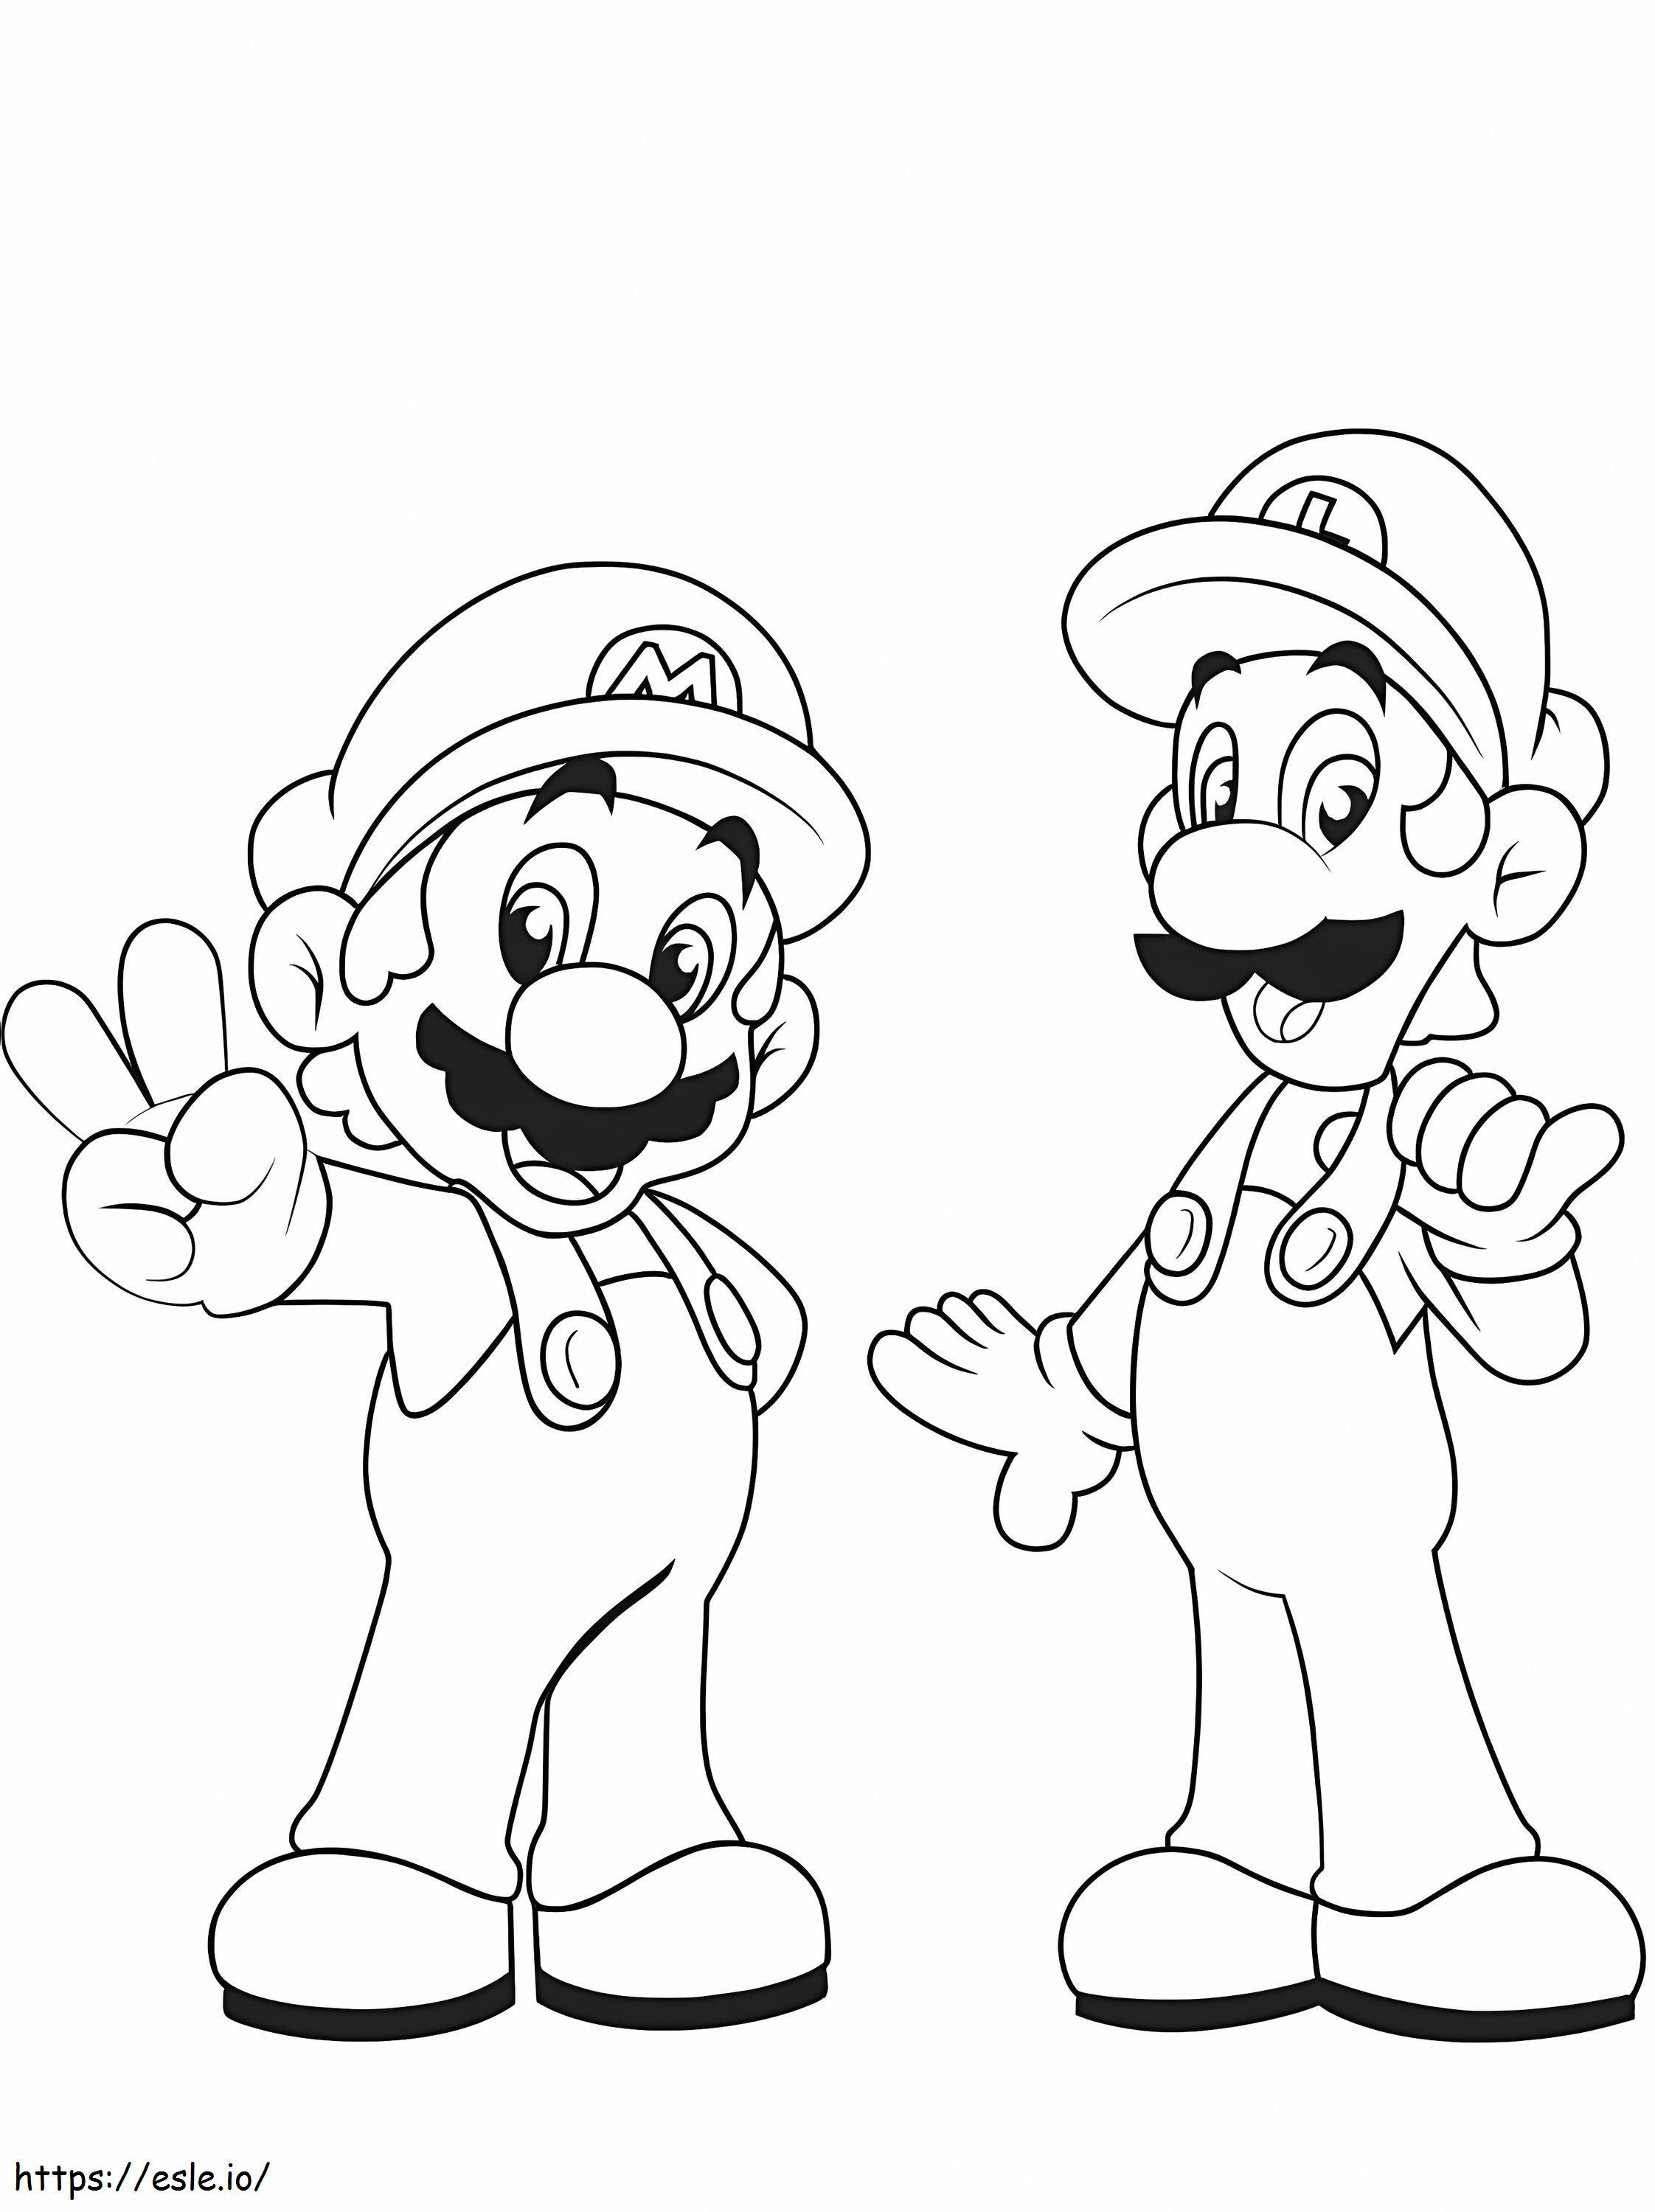 Mario și Luigi de colorat